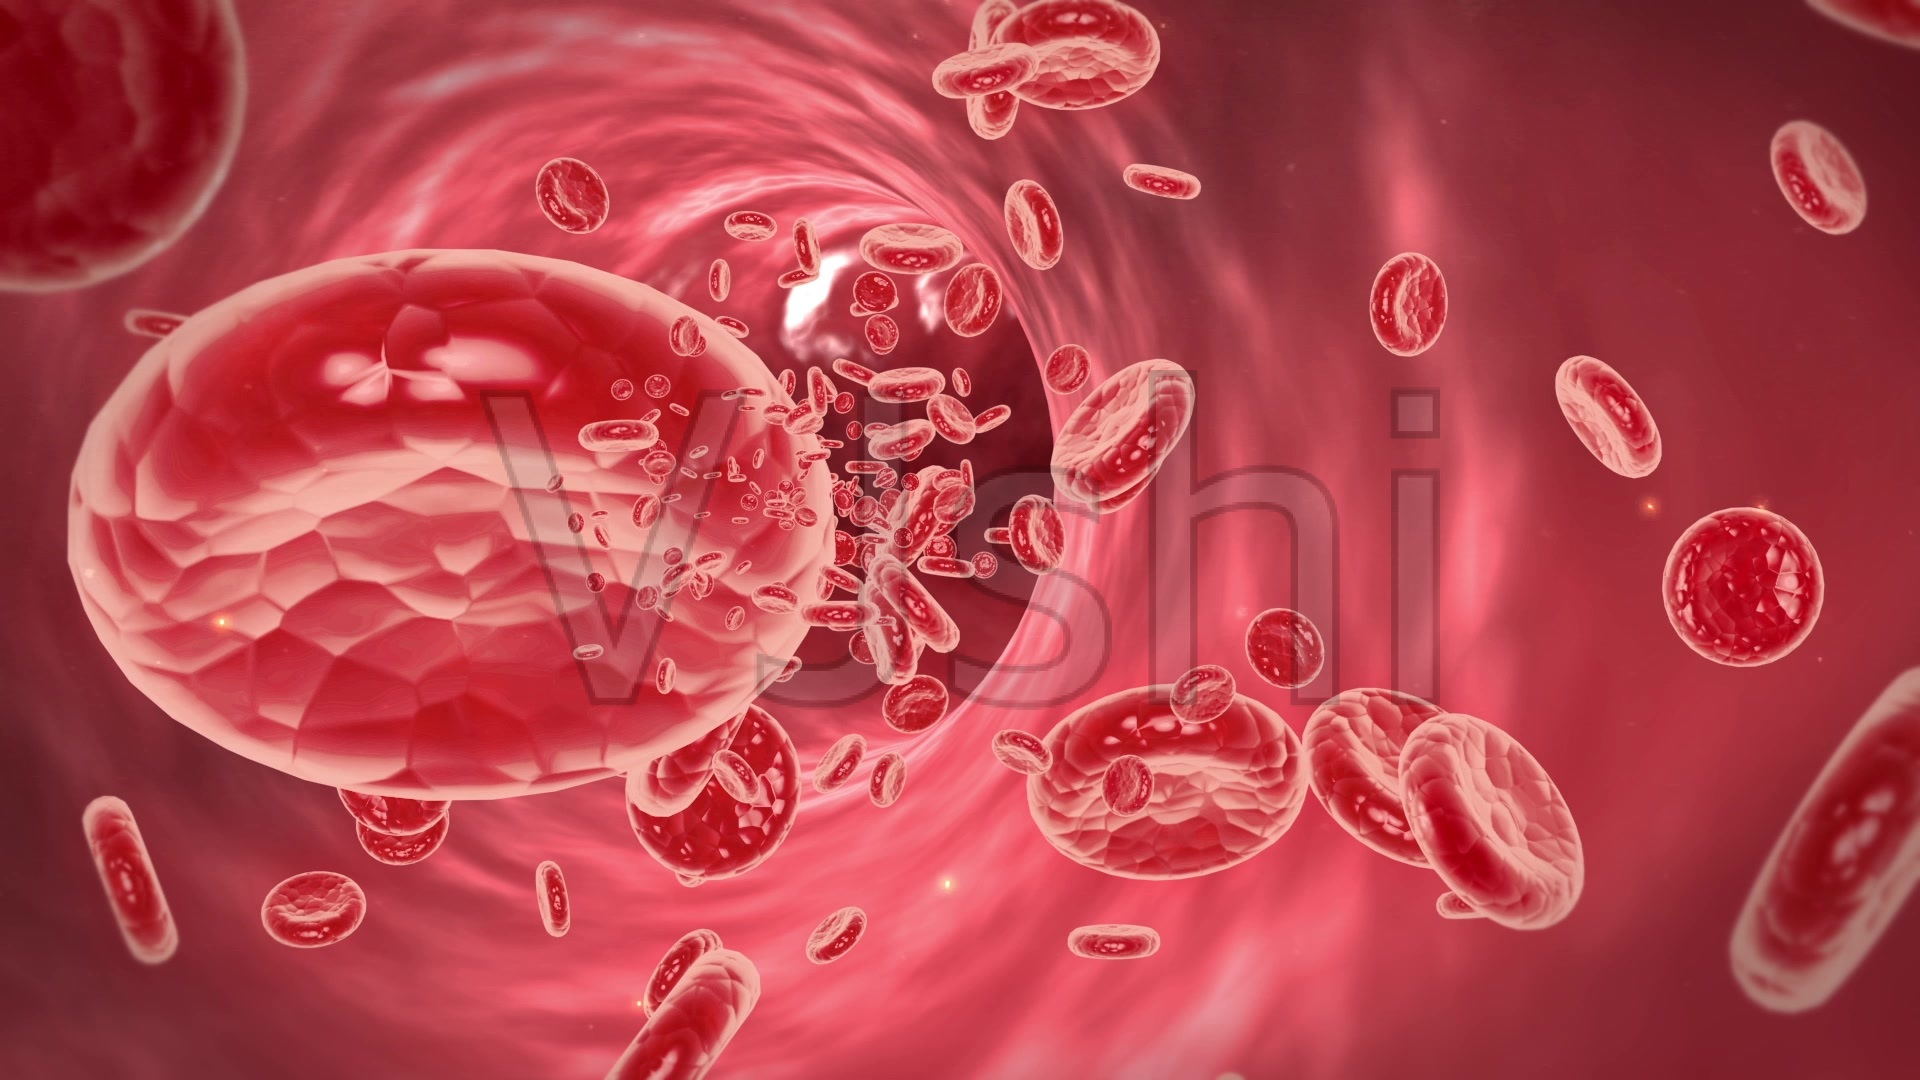 Image wall | Biology of Human/World of Viruses